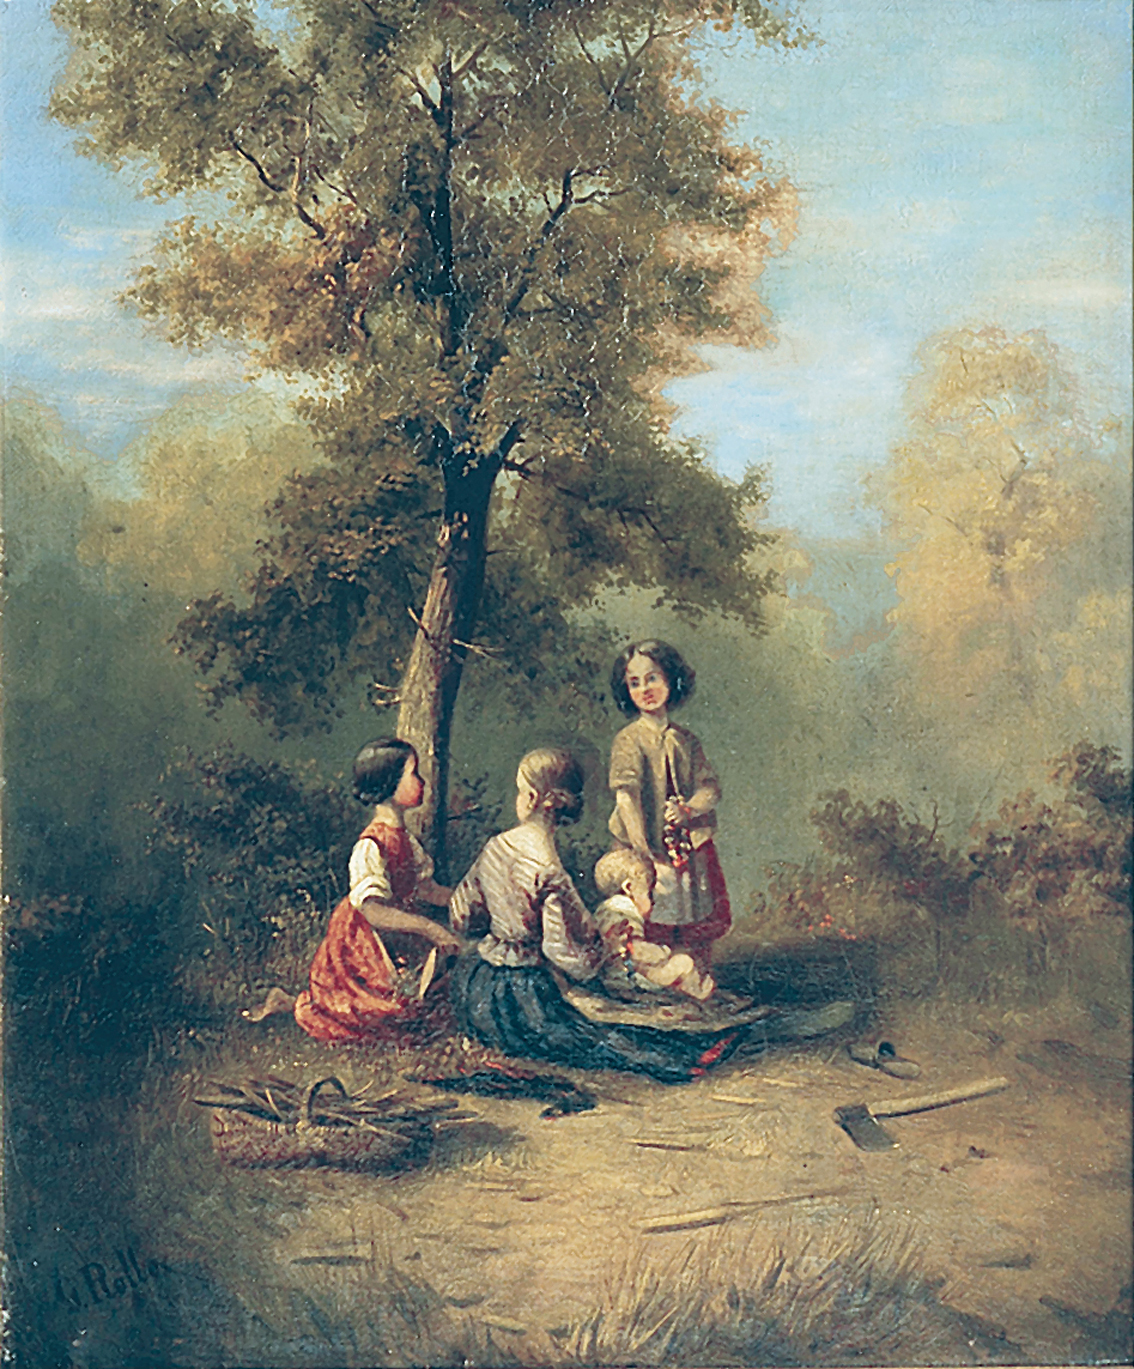 Children beneath a tree